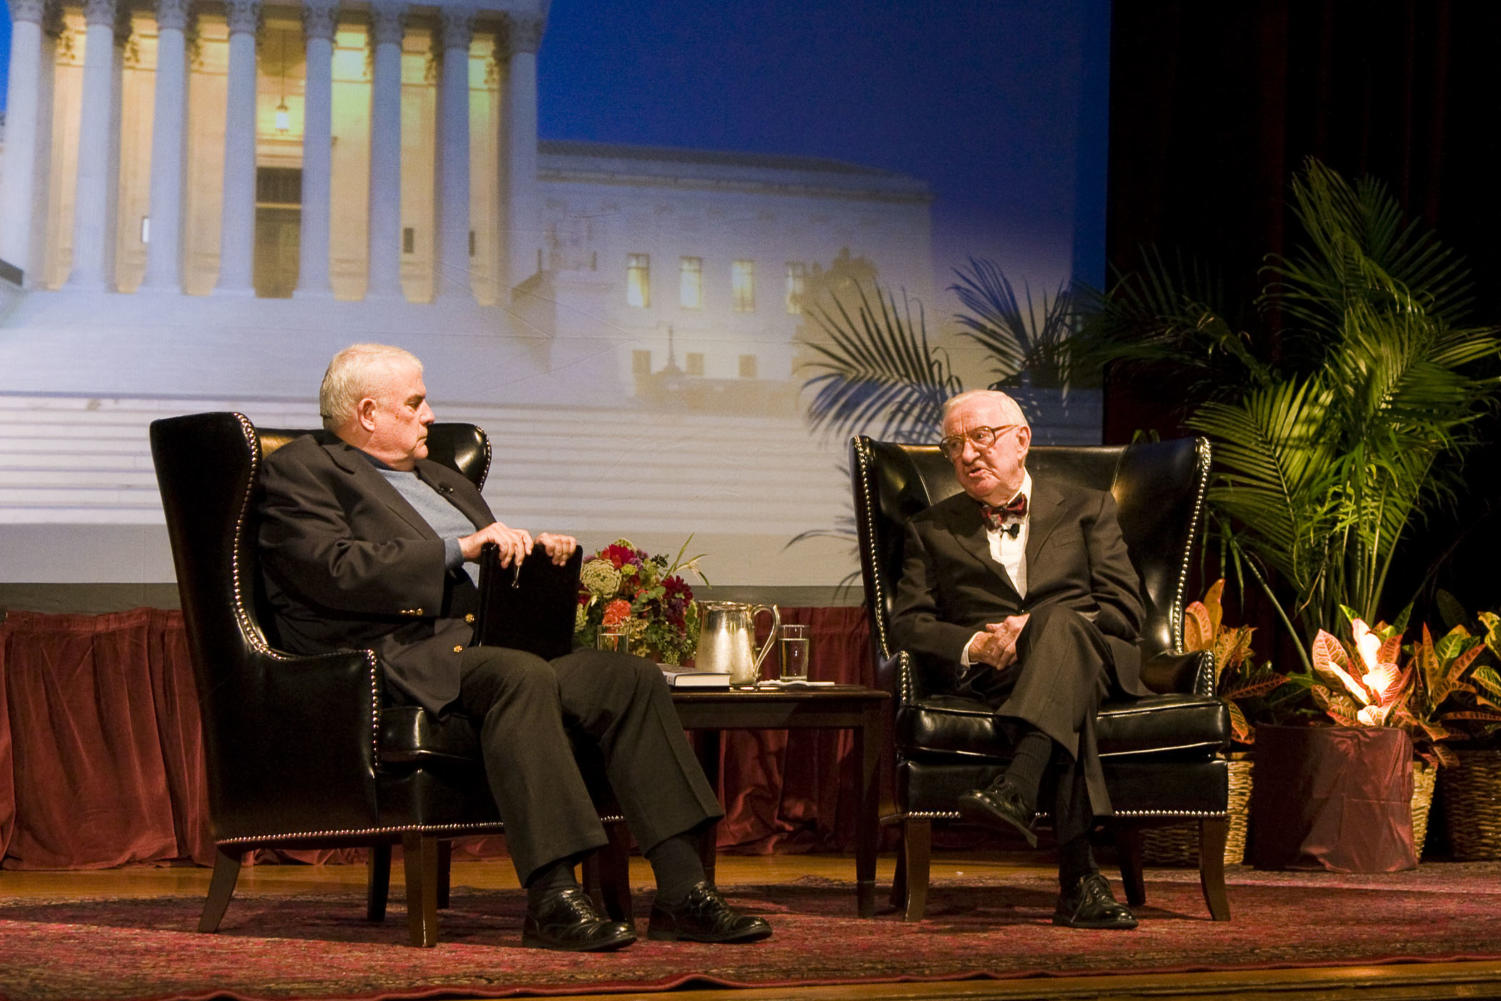 Former Supreme Court justice John Paul Stevens, AB'41, speaks at International House on Tuesday evening.